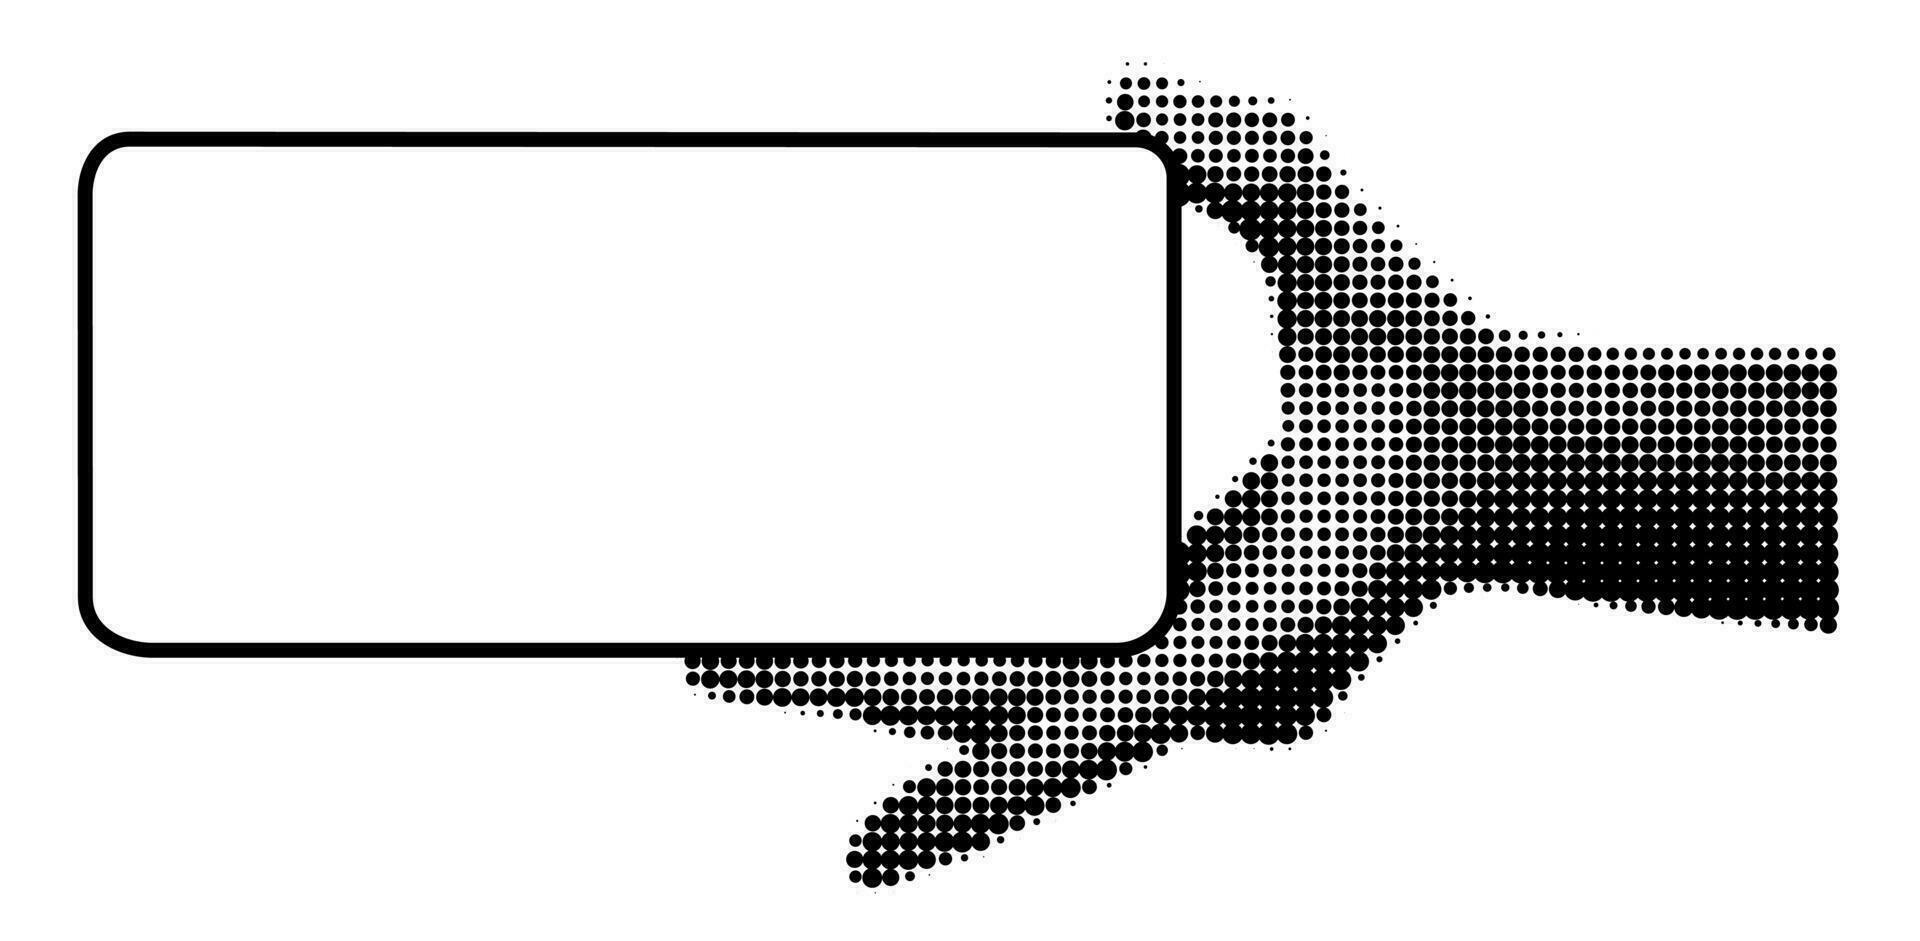 trama de semitonos mano participación teléfono inteligente horizontalmente vector ilustración